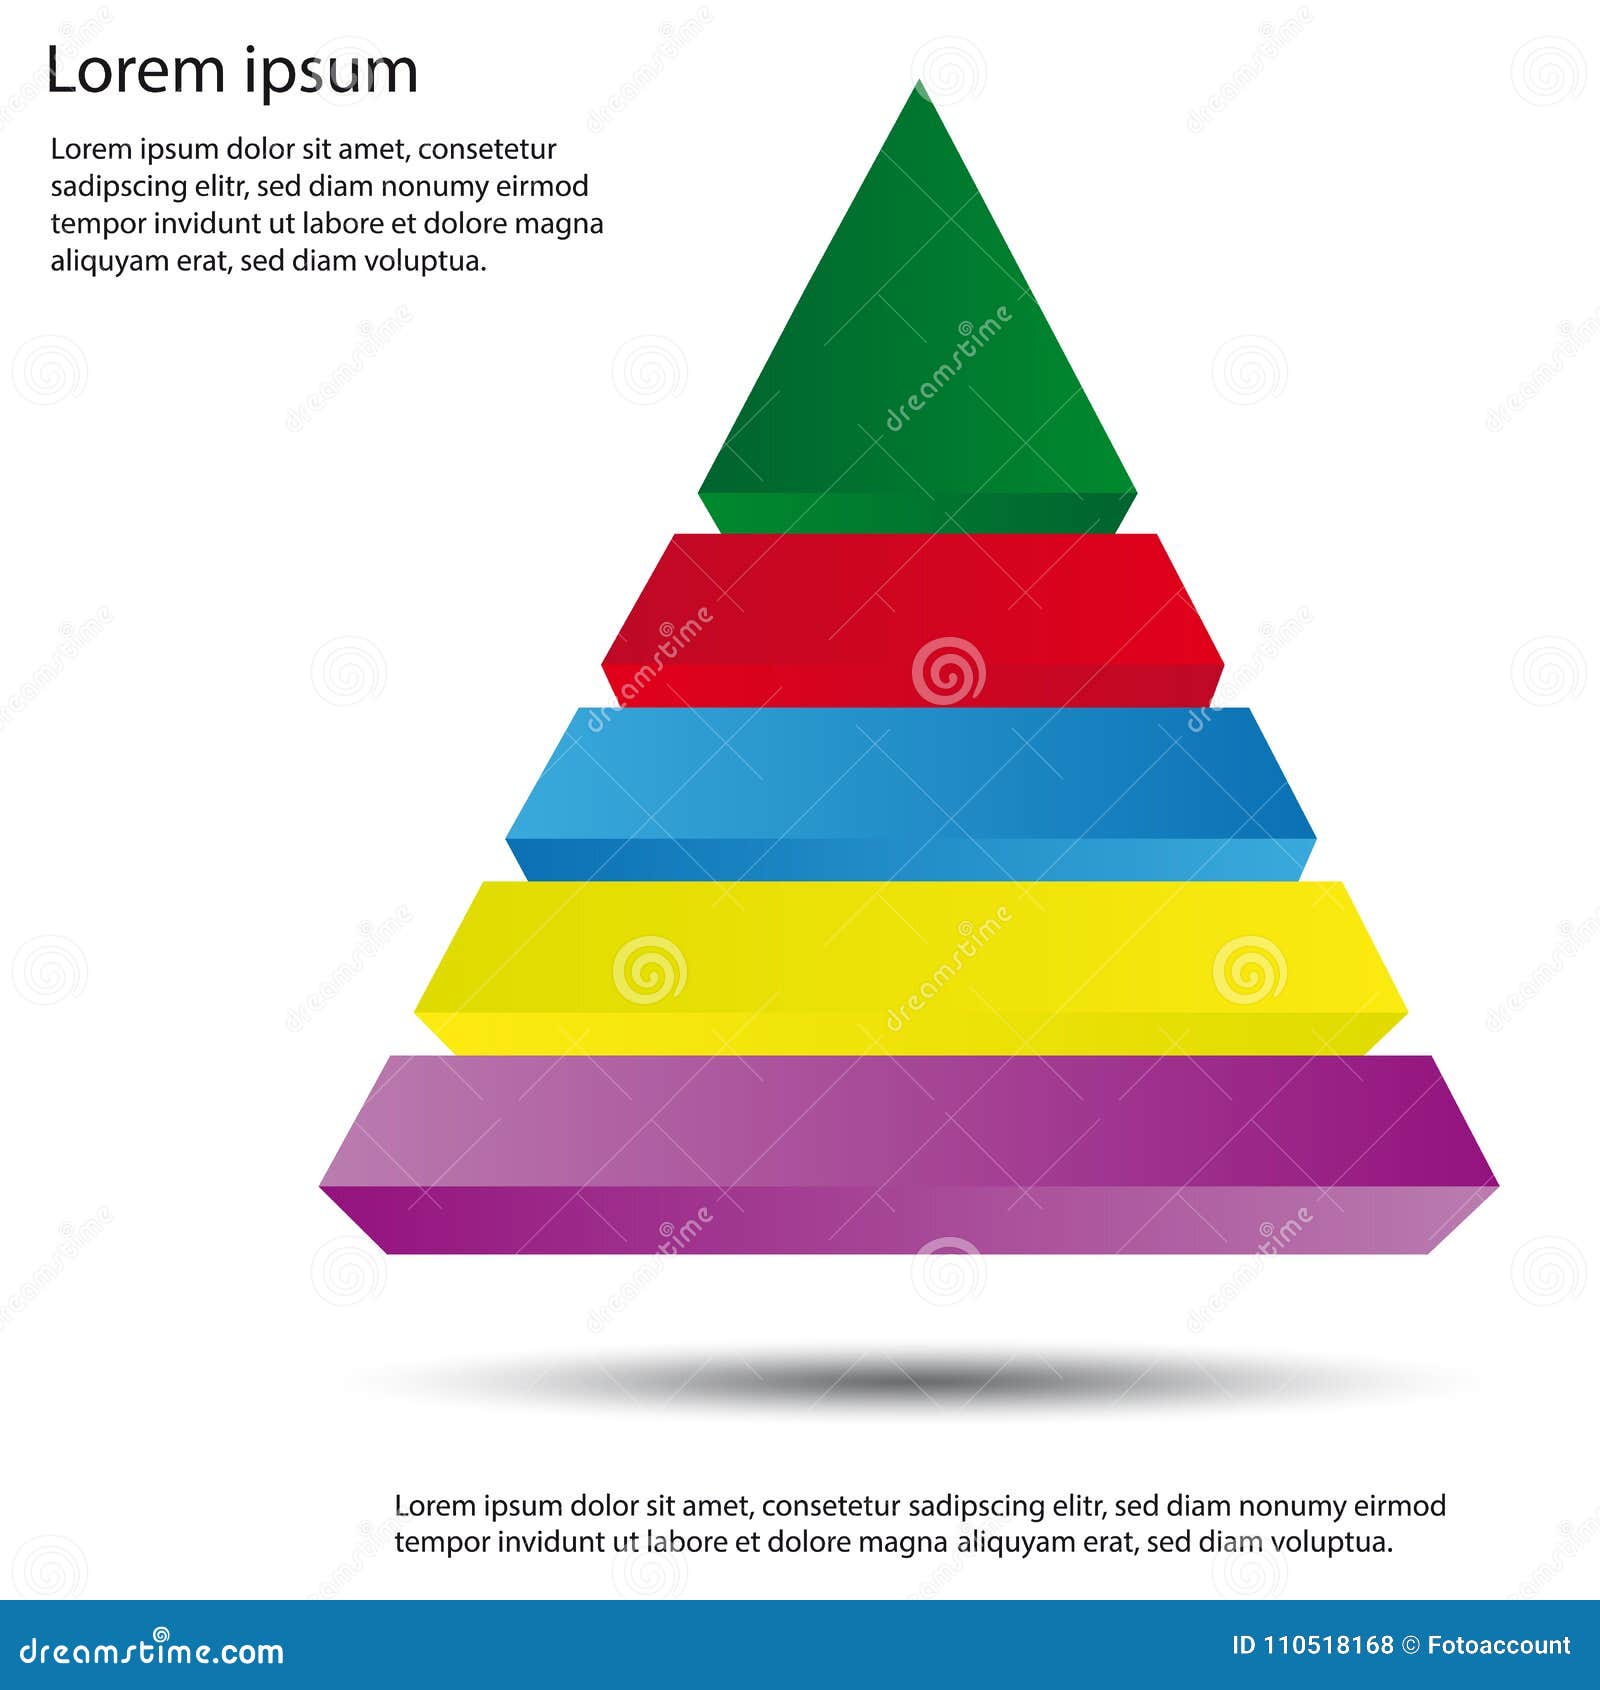 Pyramid Diagram Royalty-Free Stock Image | CartoonDealer.com #85509442